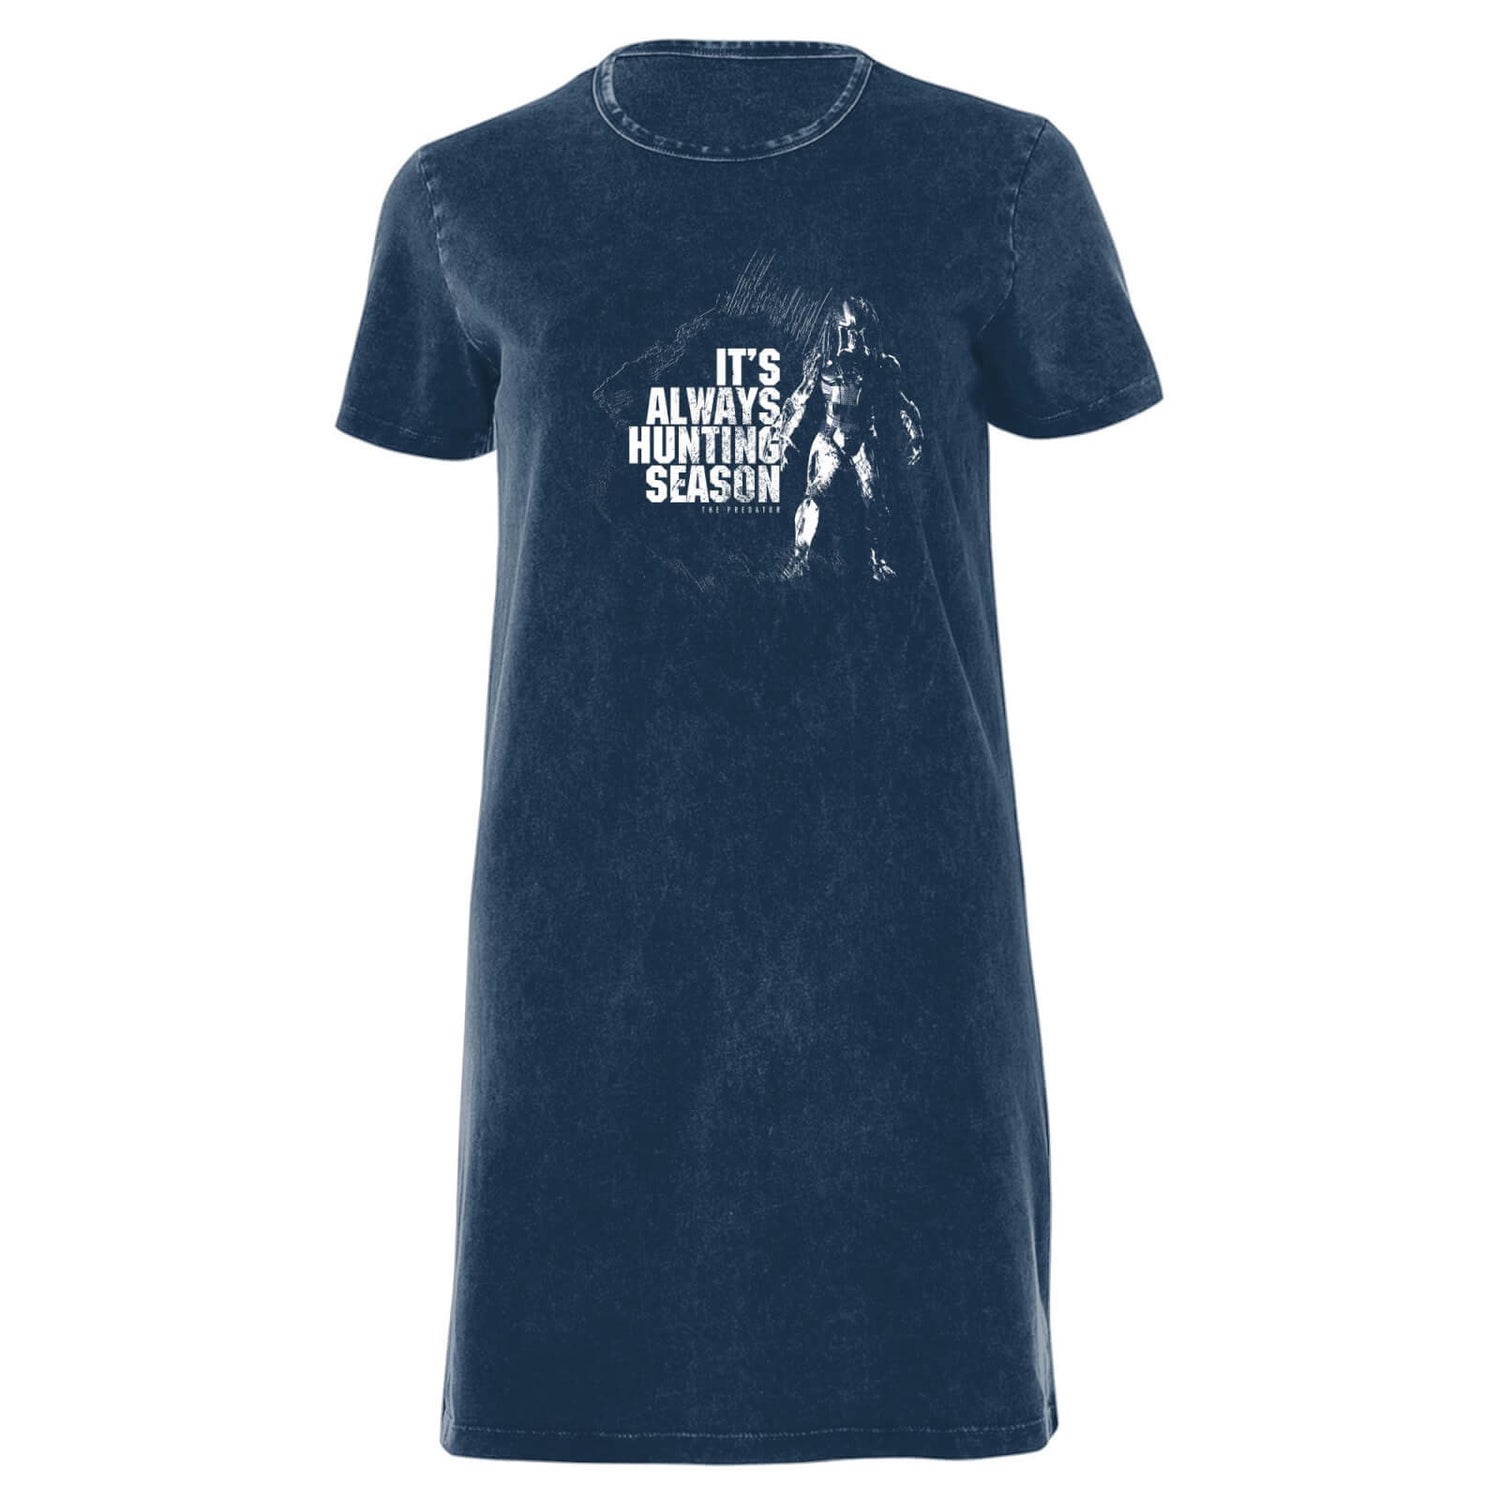 Predator Always Hunting Season Women's T-Shirt Dress - Navy Acid Wash